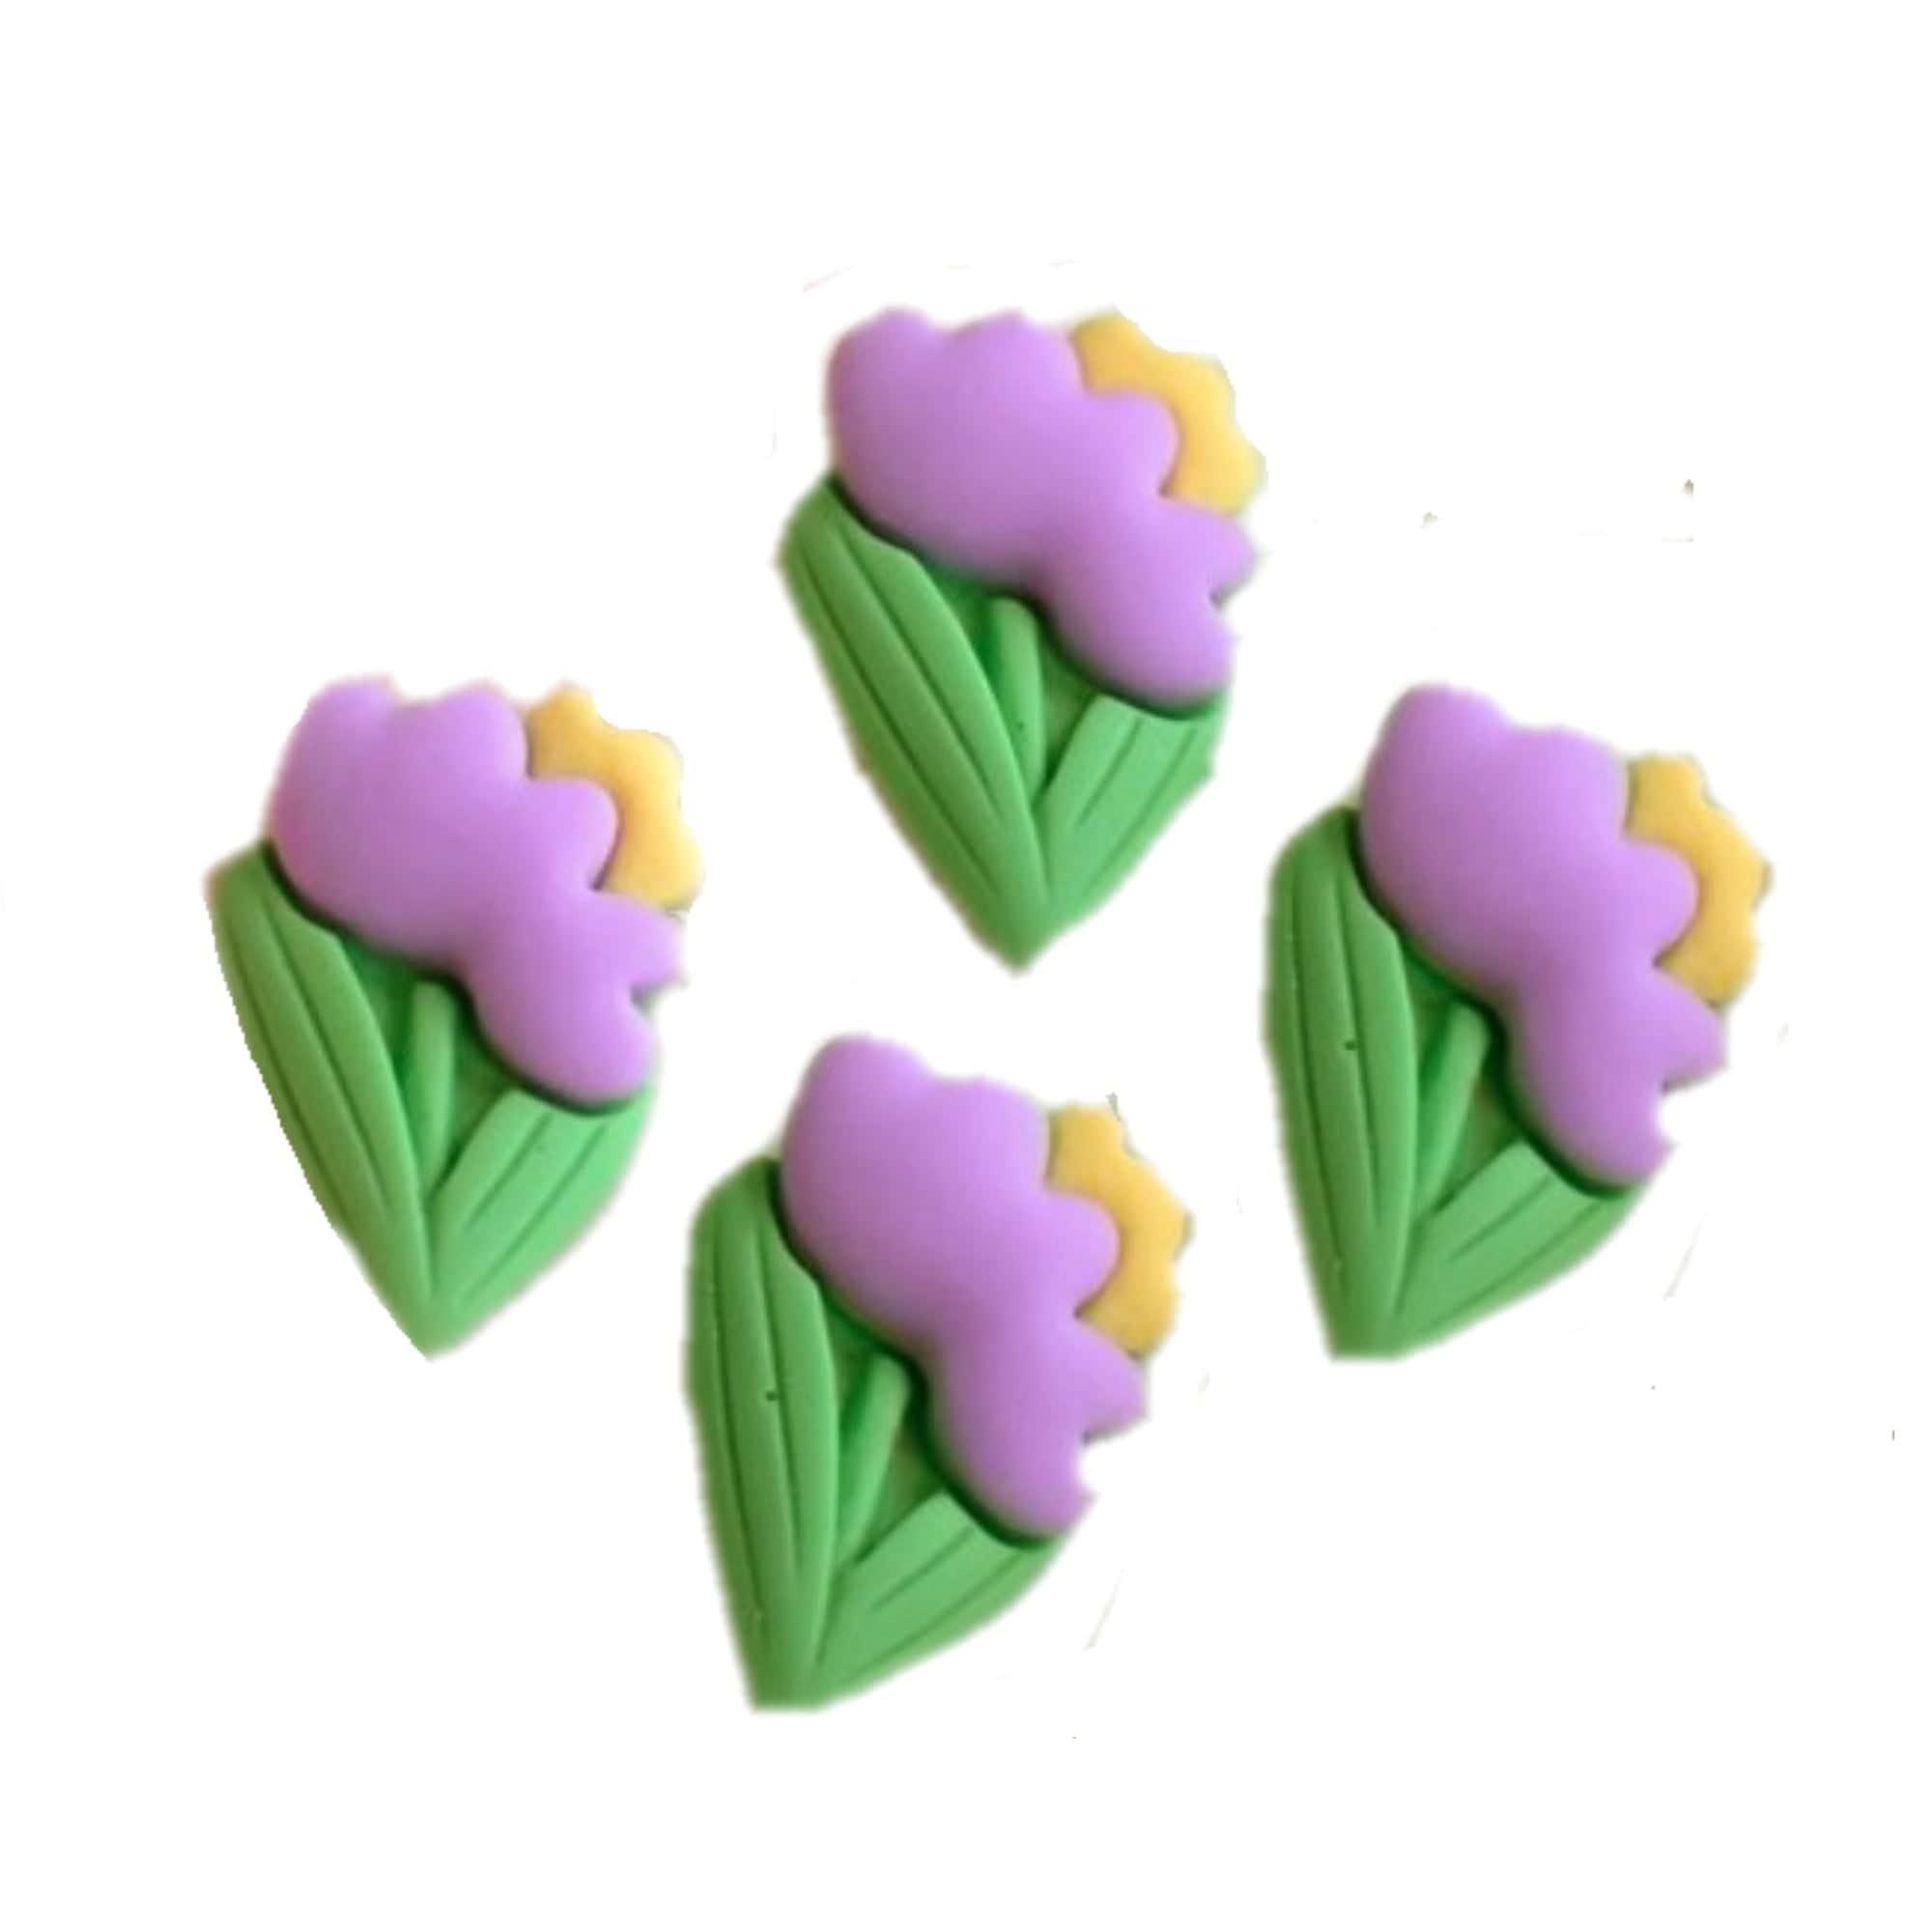 Flower Fun Collection 1" Purple Flower Flatback Scrapbook Buttons by SSC Designs - Pkg. of 4